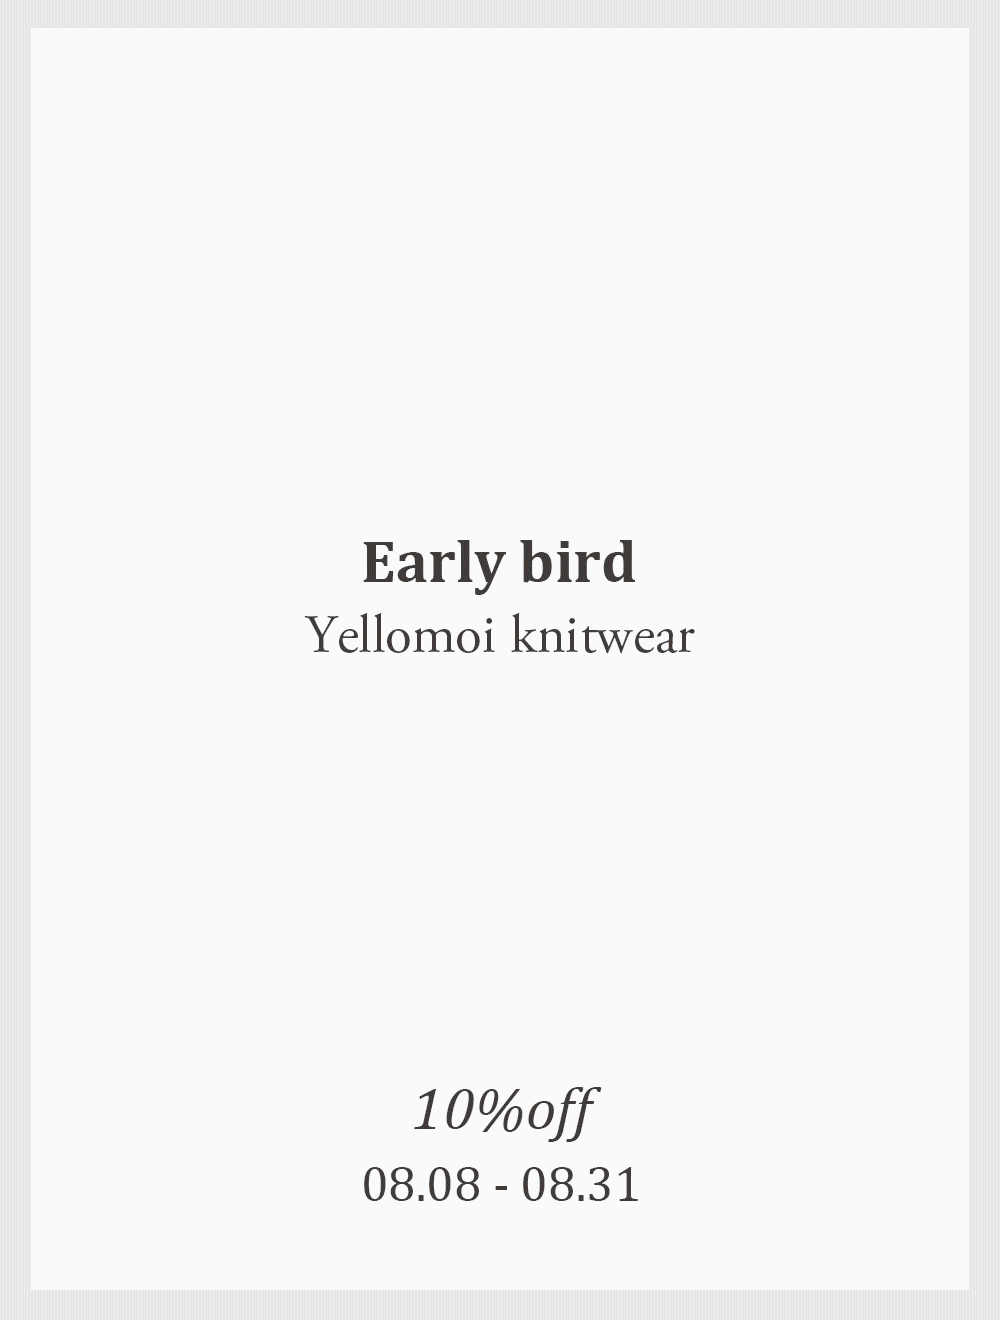 [YELLOMOI/early bird 10%] 모앙알파카 - knit